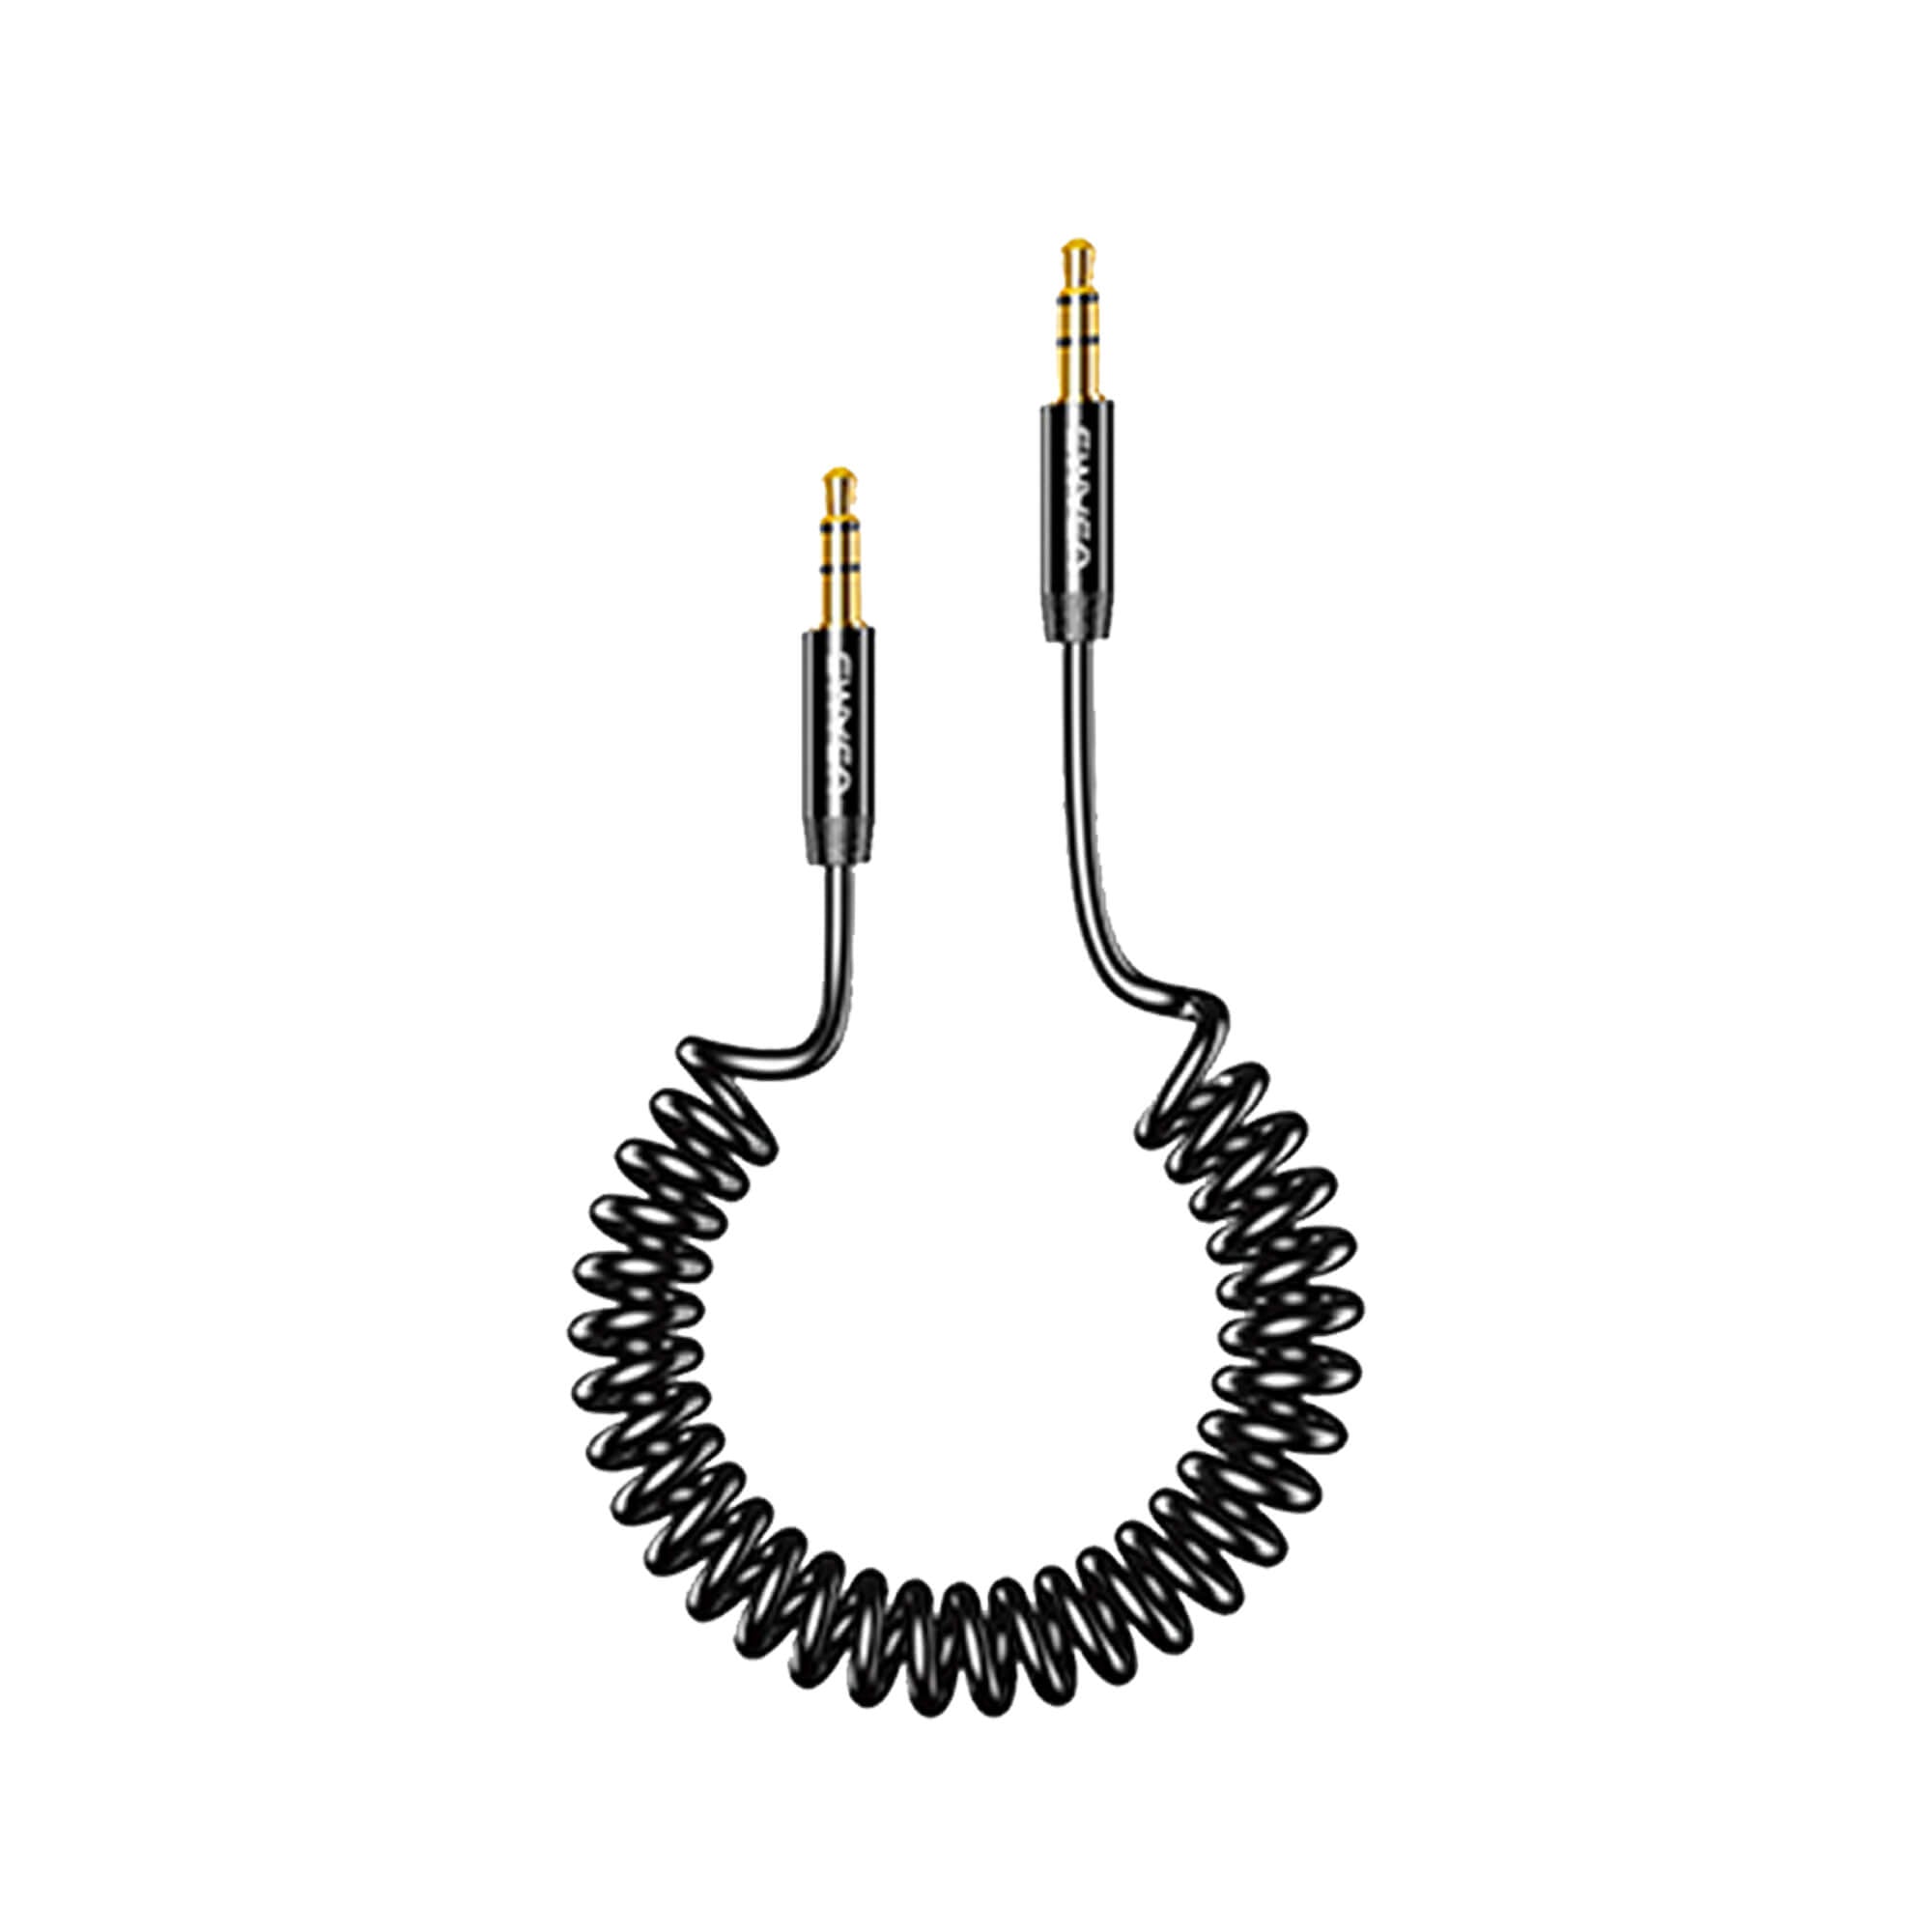 USAMS US-SJ256 Spring Audio Cable 1.2m